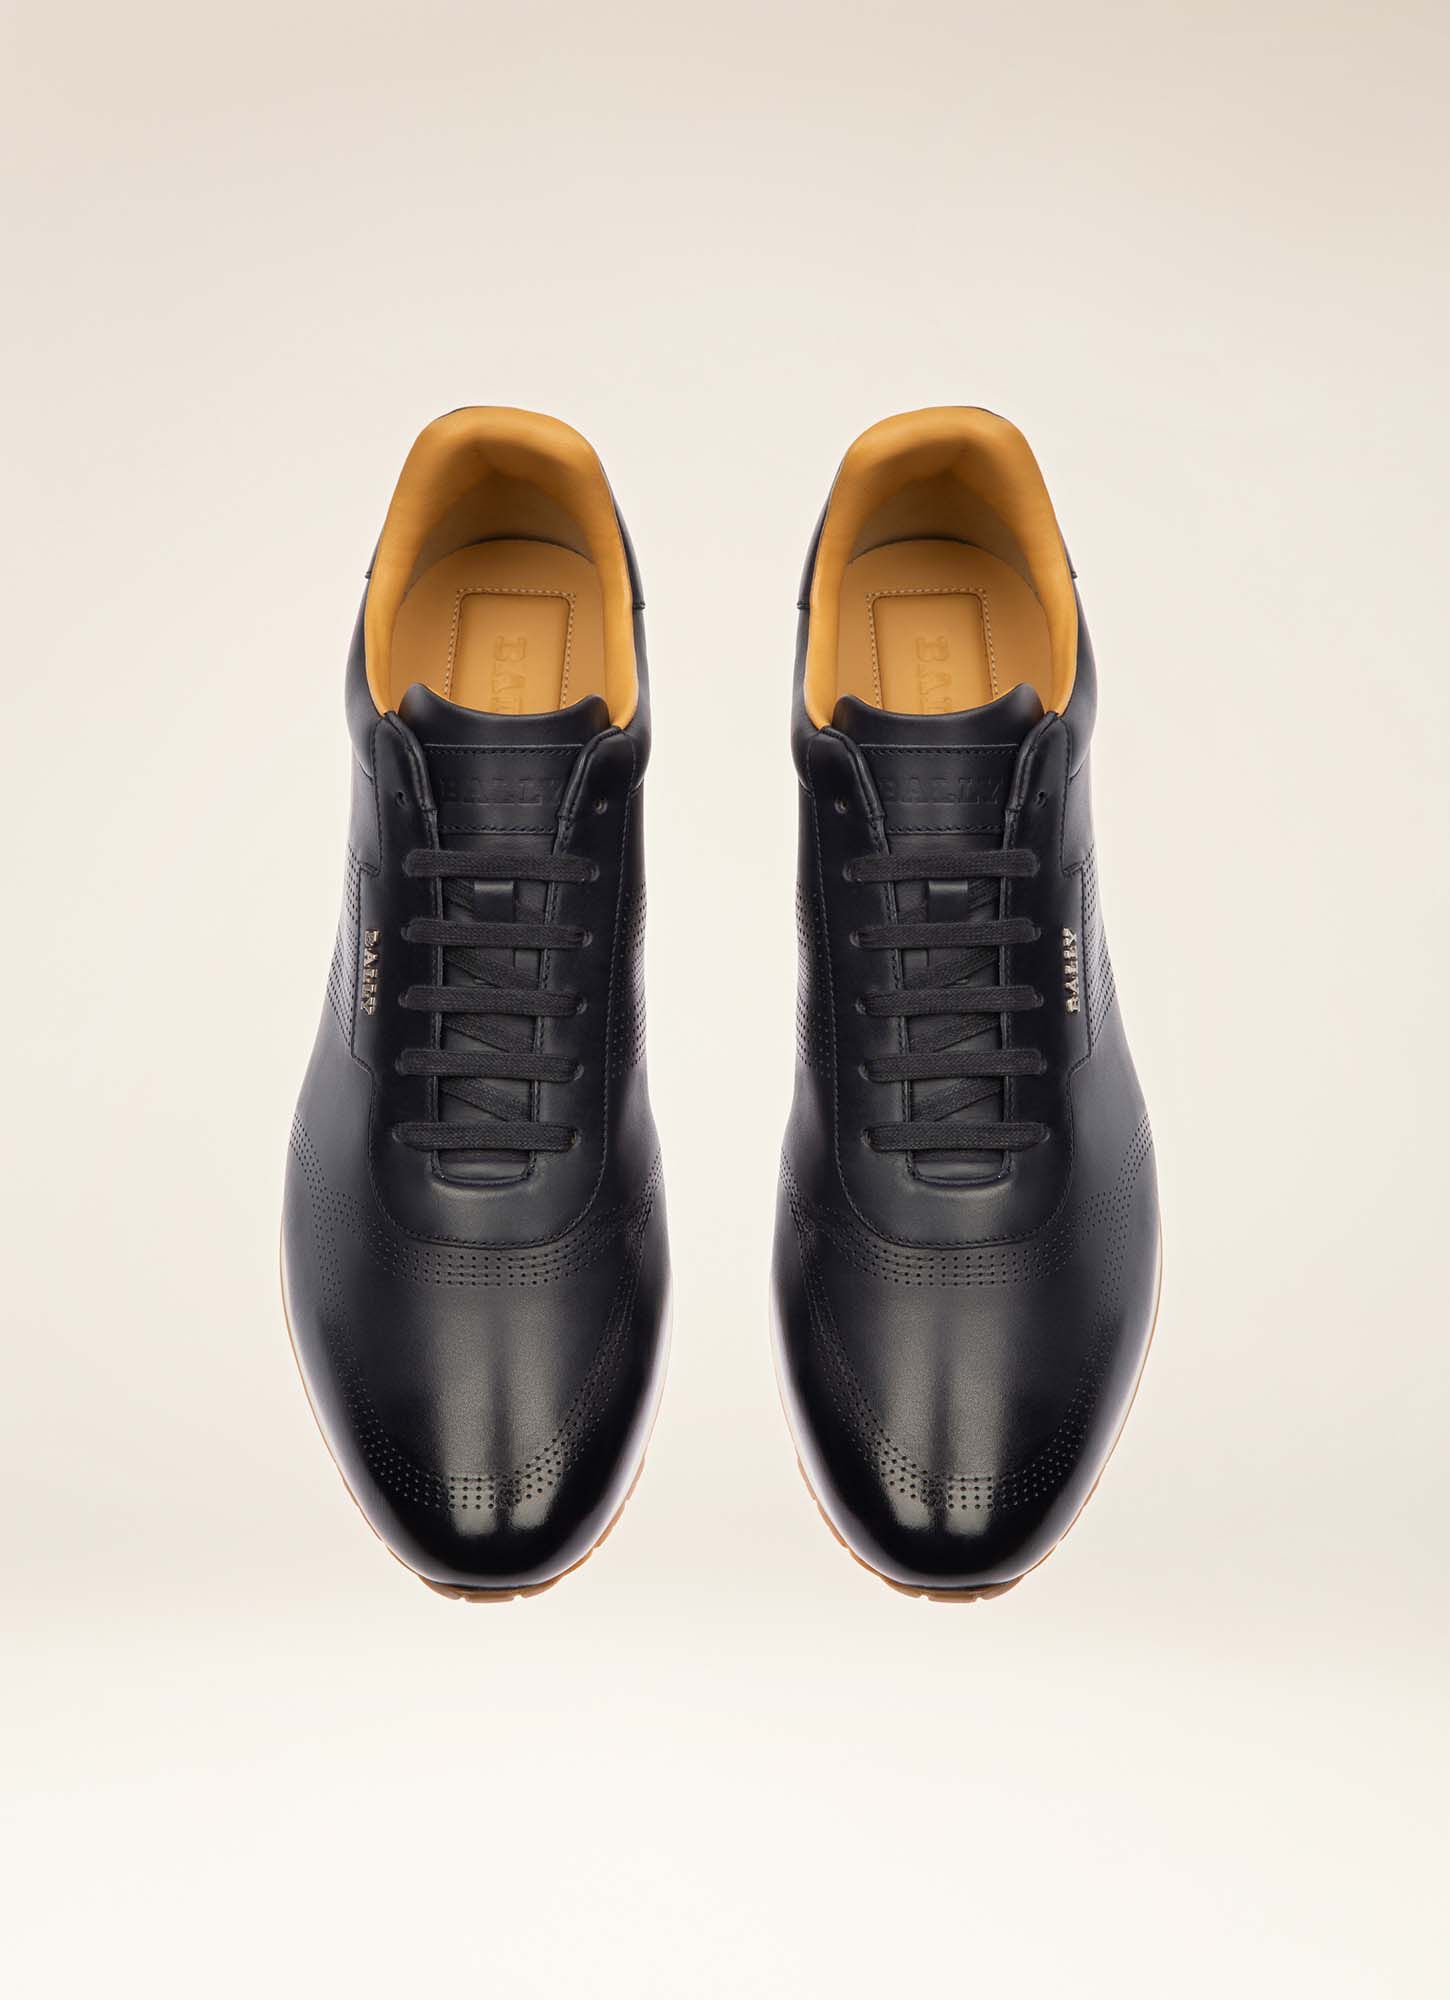 US 10 Bally NEW Bally Acona Ascan Shoes Navy Blue Calf Leather Size 43 UK 9 